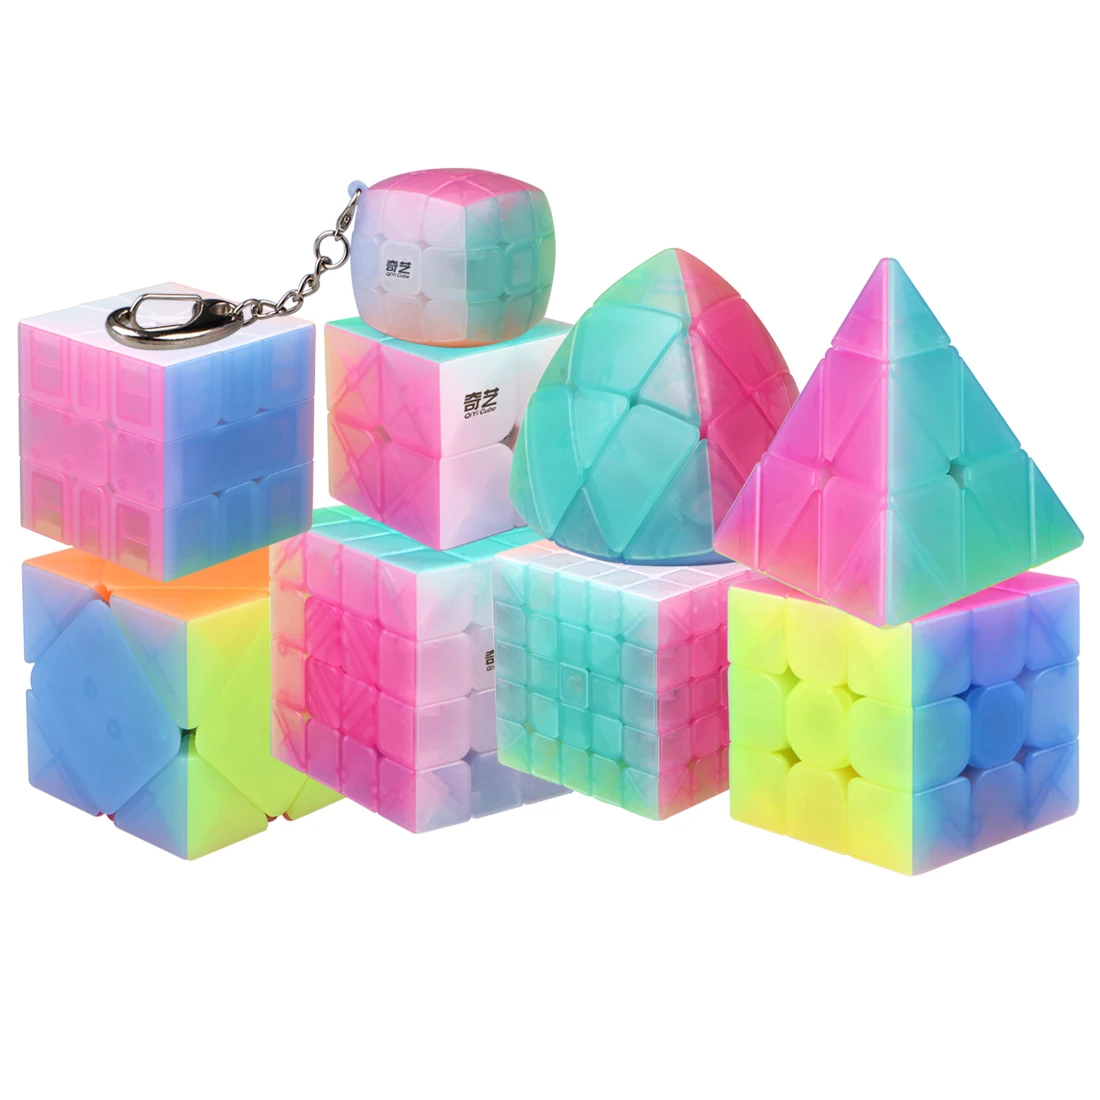 Jelly cubes. QIYI Cube Jelly. Mofange Jelly Cubes набор. Магический куб набор. Желейные кубики.